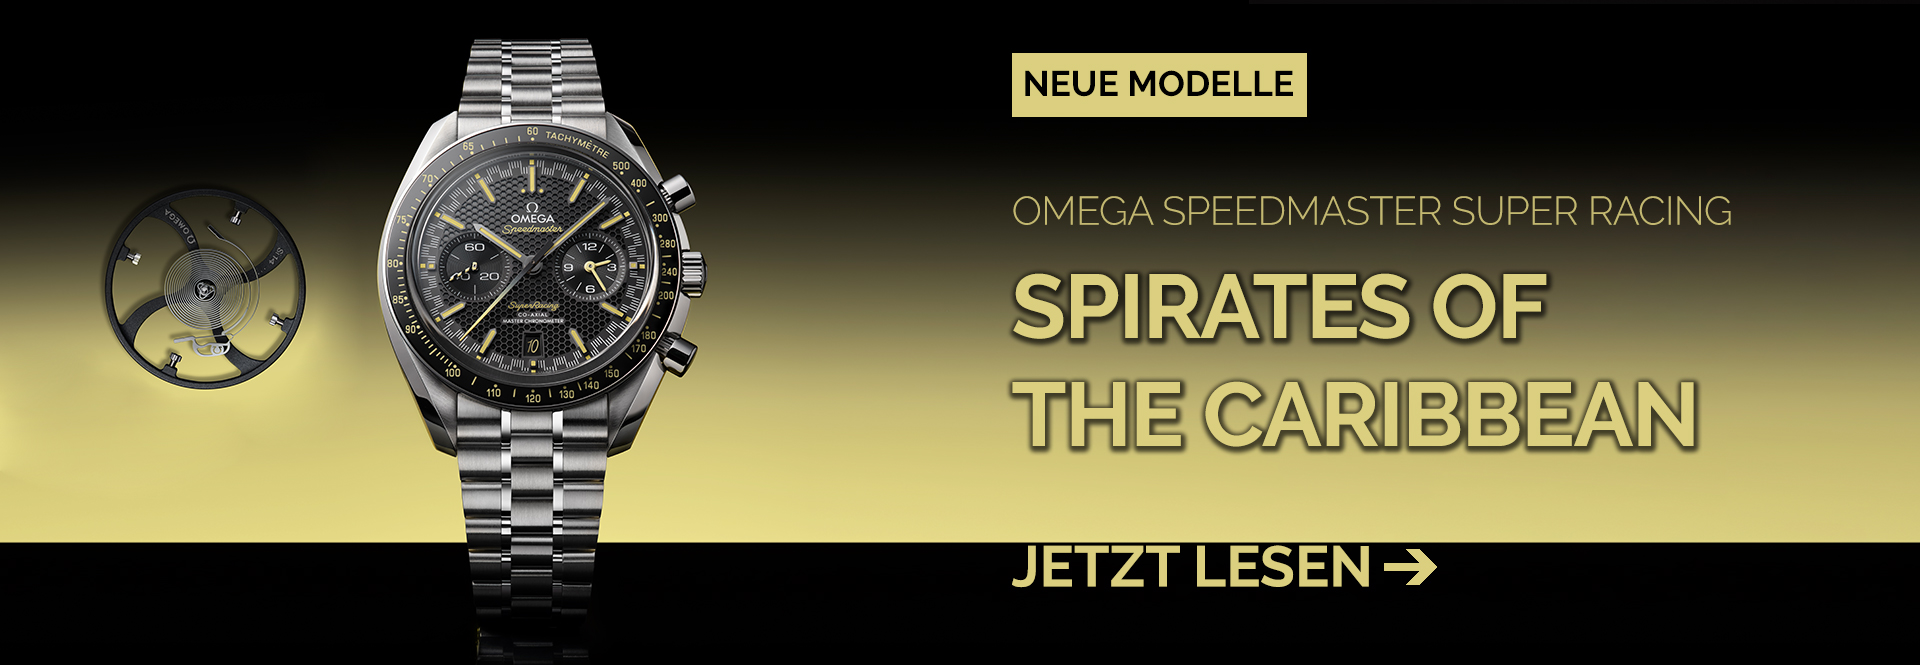 Omega Speedmaster Super Racing Spirate